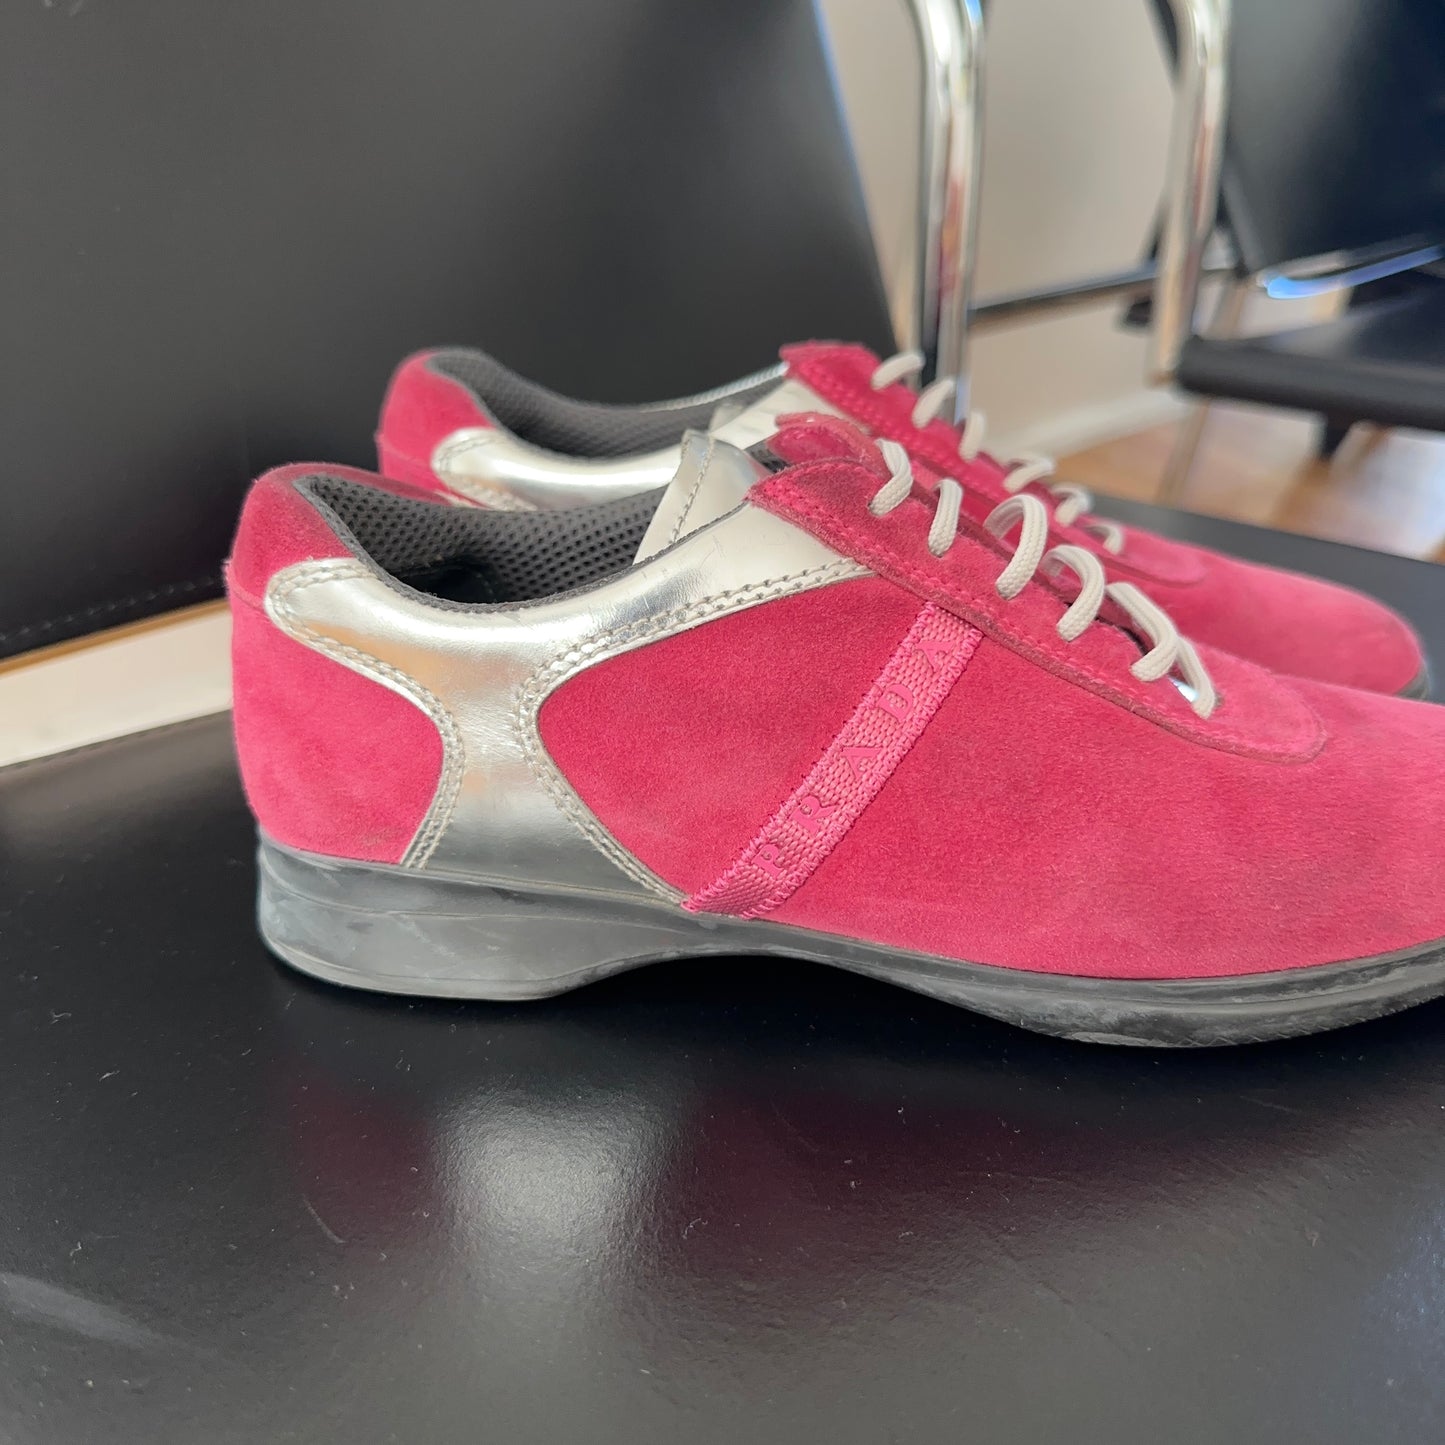 suede sneakers — hot pink